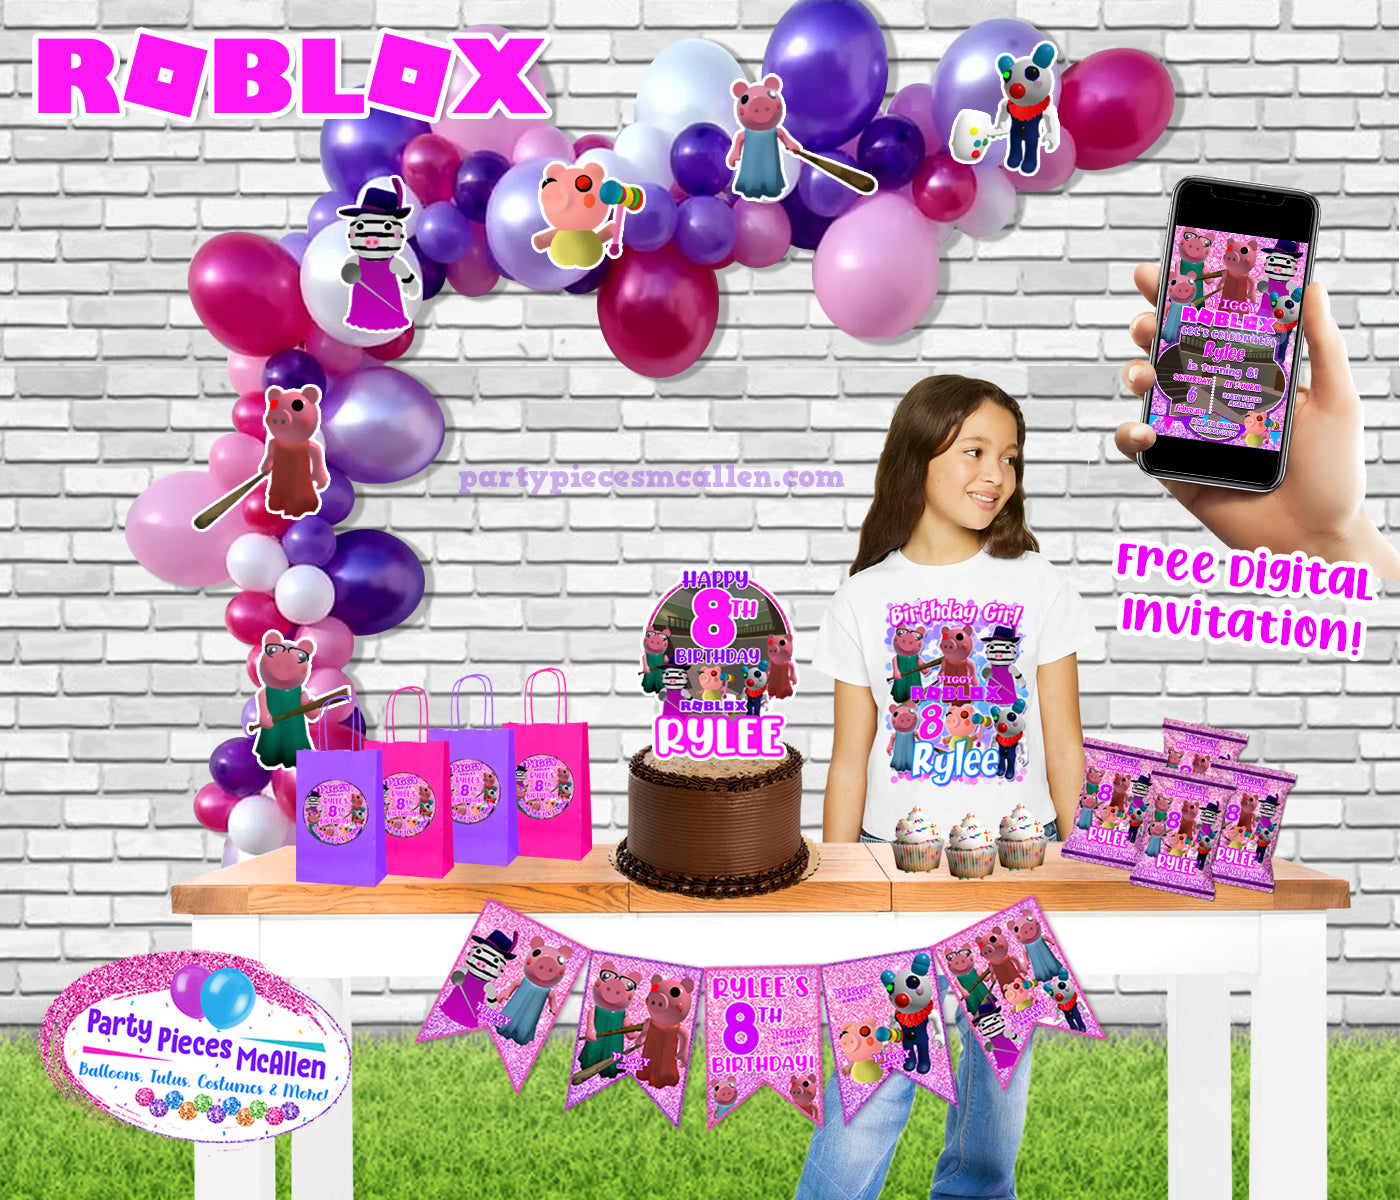 Girl Roblox Dark Skin Printable Package – Party Pieces McAllen